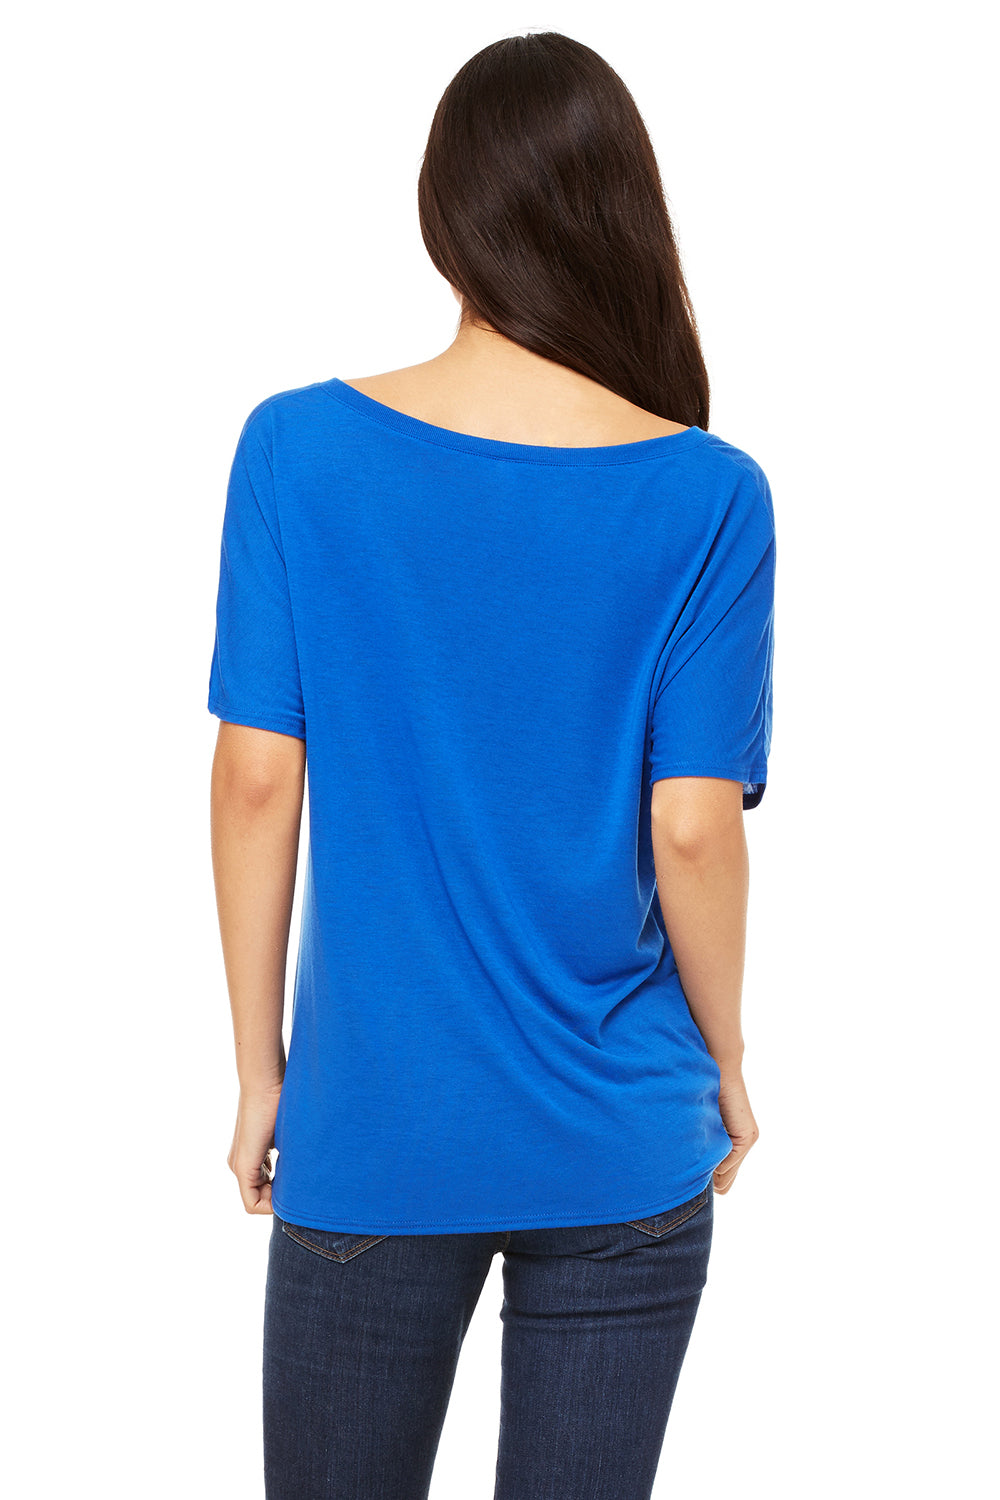 Bella + Canvas 8815 Womens Slouchy Short Sleeve V-Neck T-Shirt Royal Blue Back